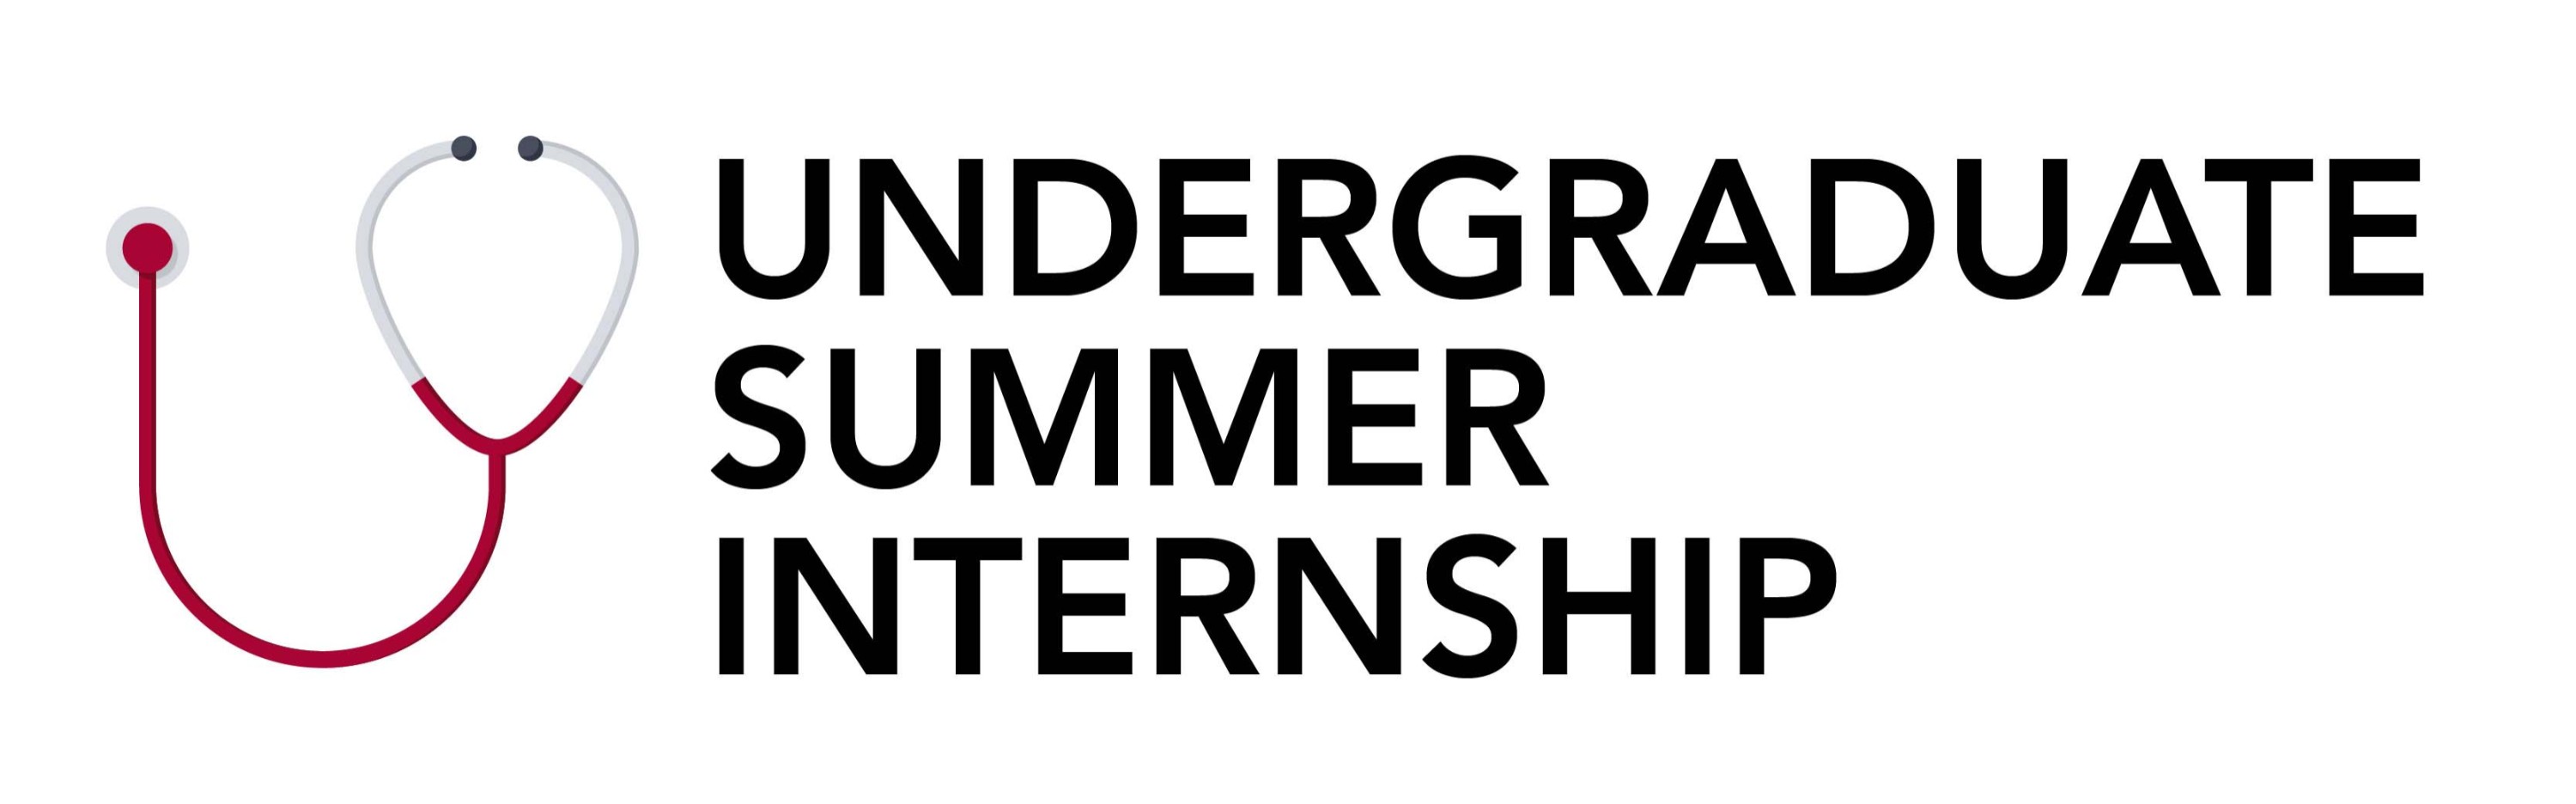 Undergraduate Summer Internship